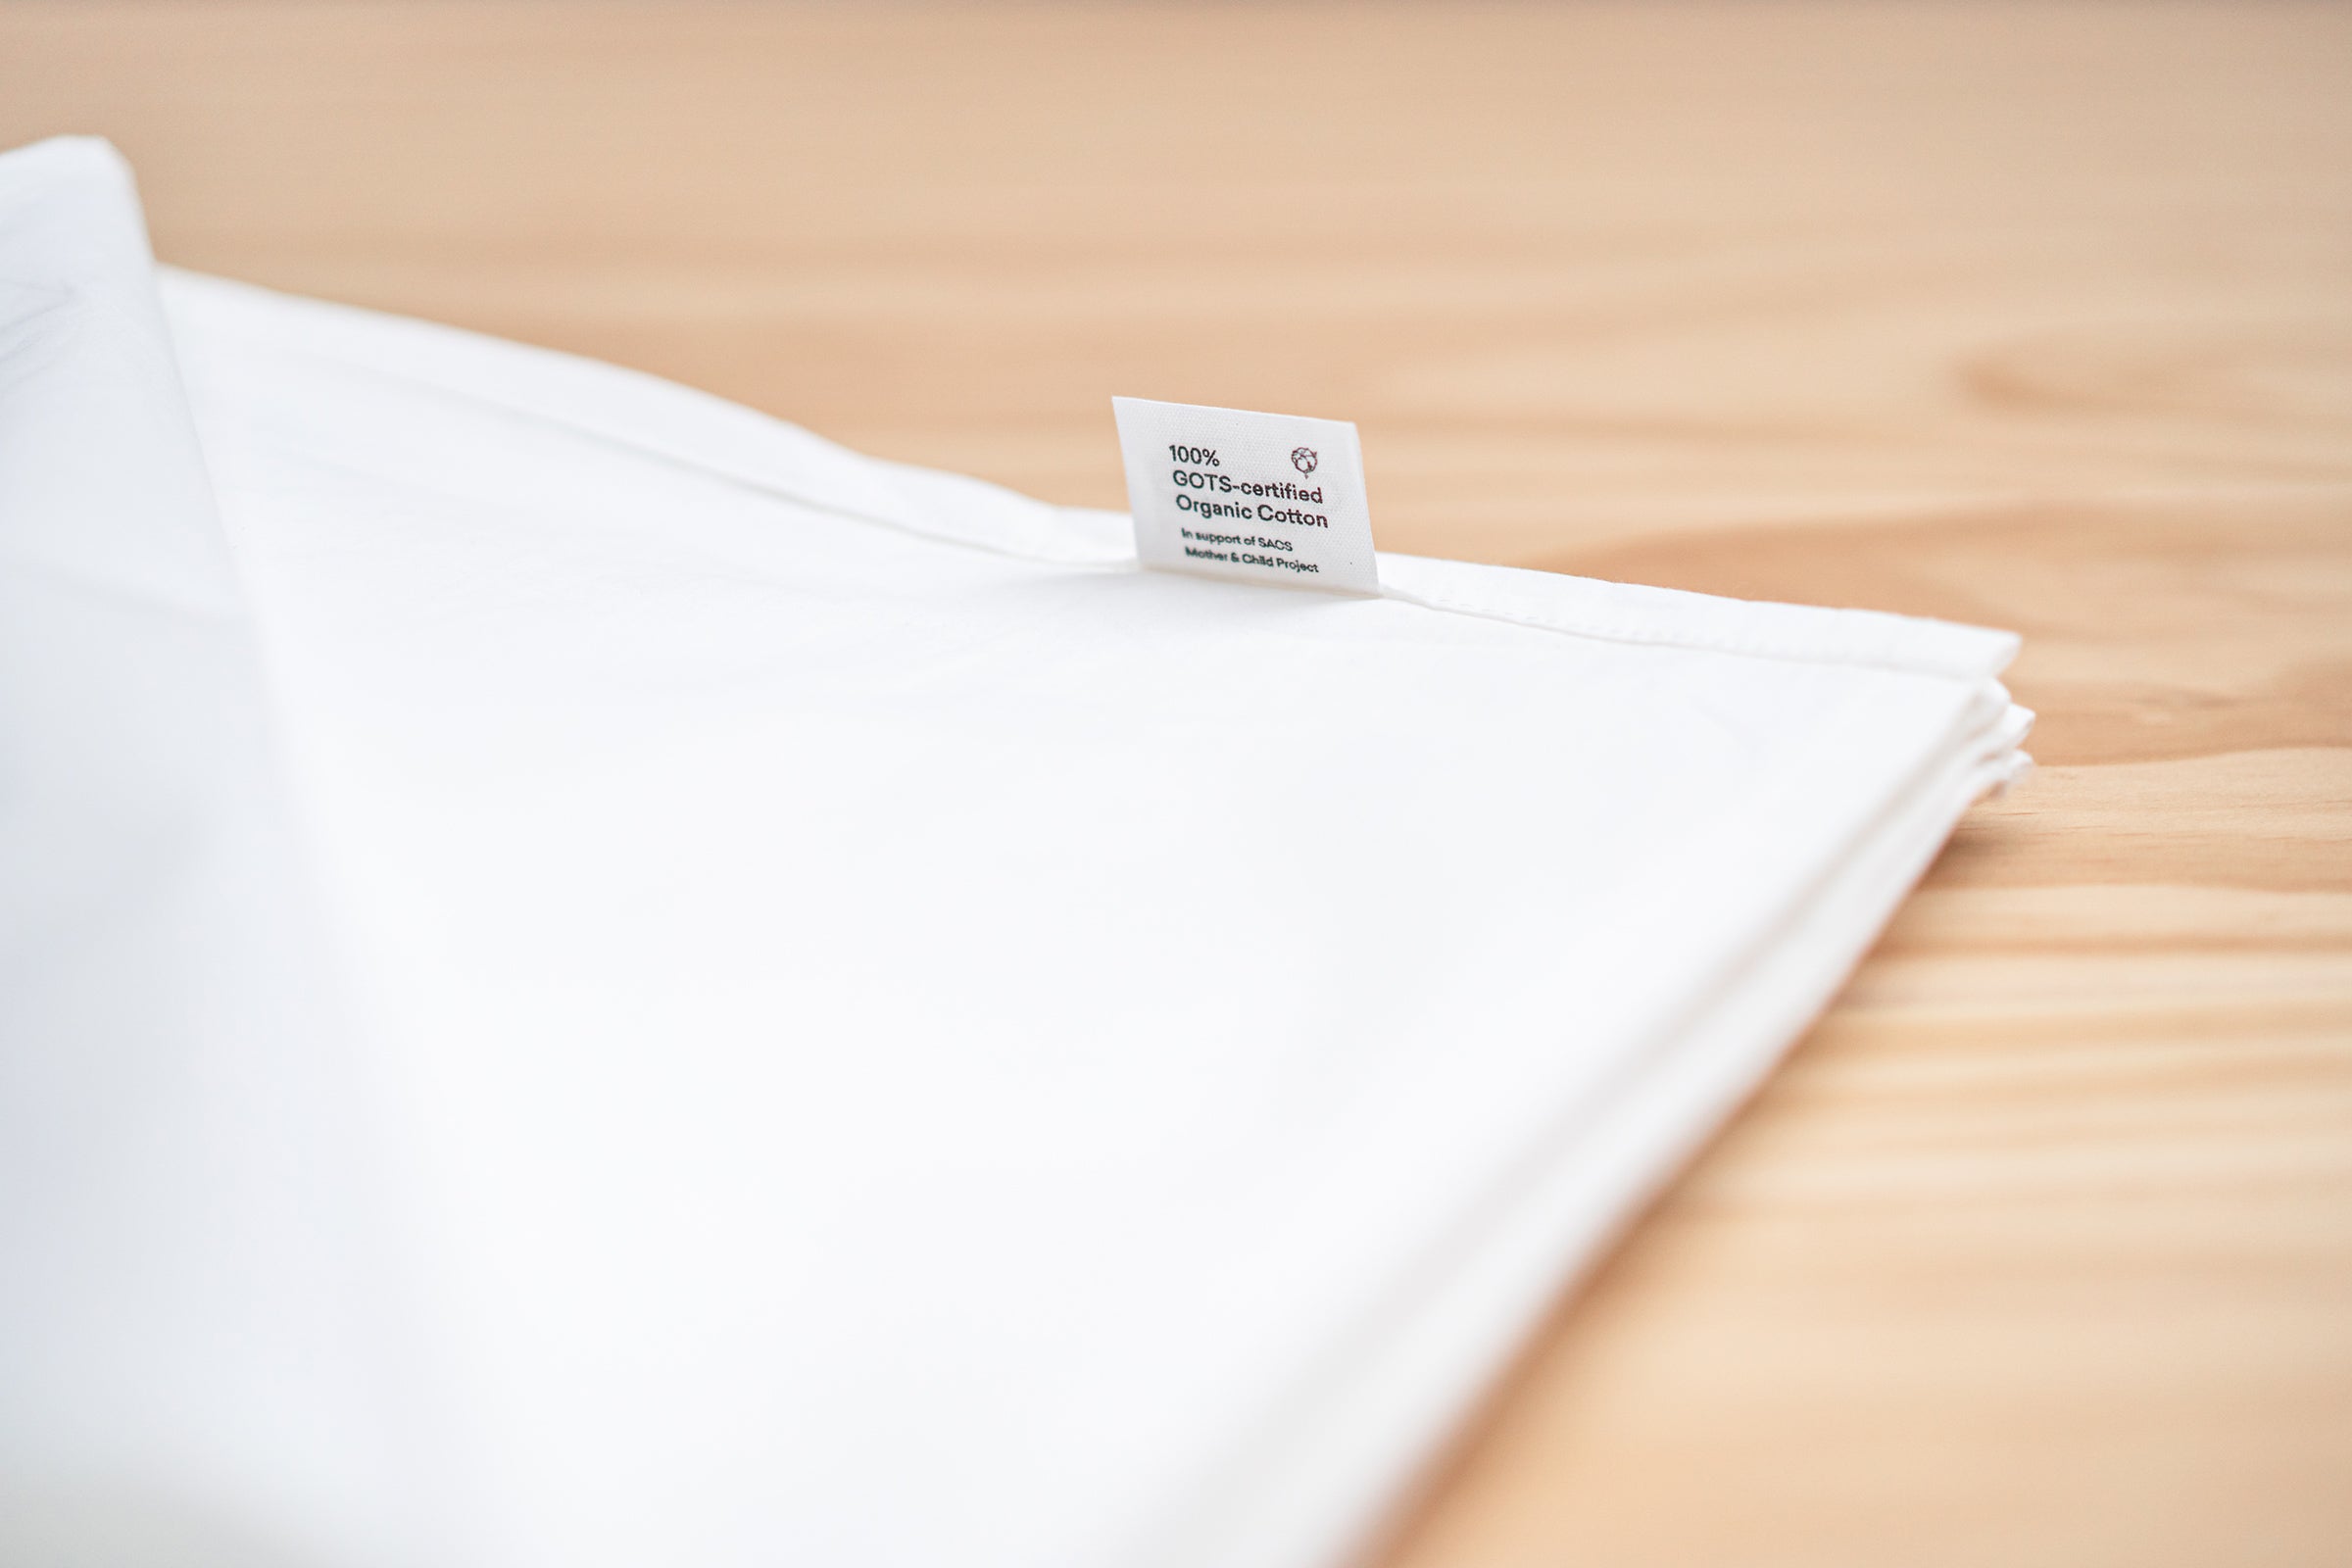 crisp-white-organic-cotton-table-cloth-label-tag-shot-by-sojao.jpg